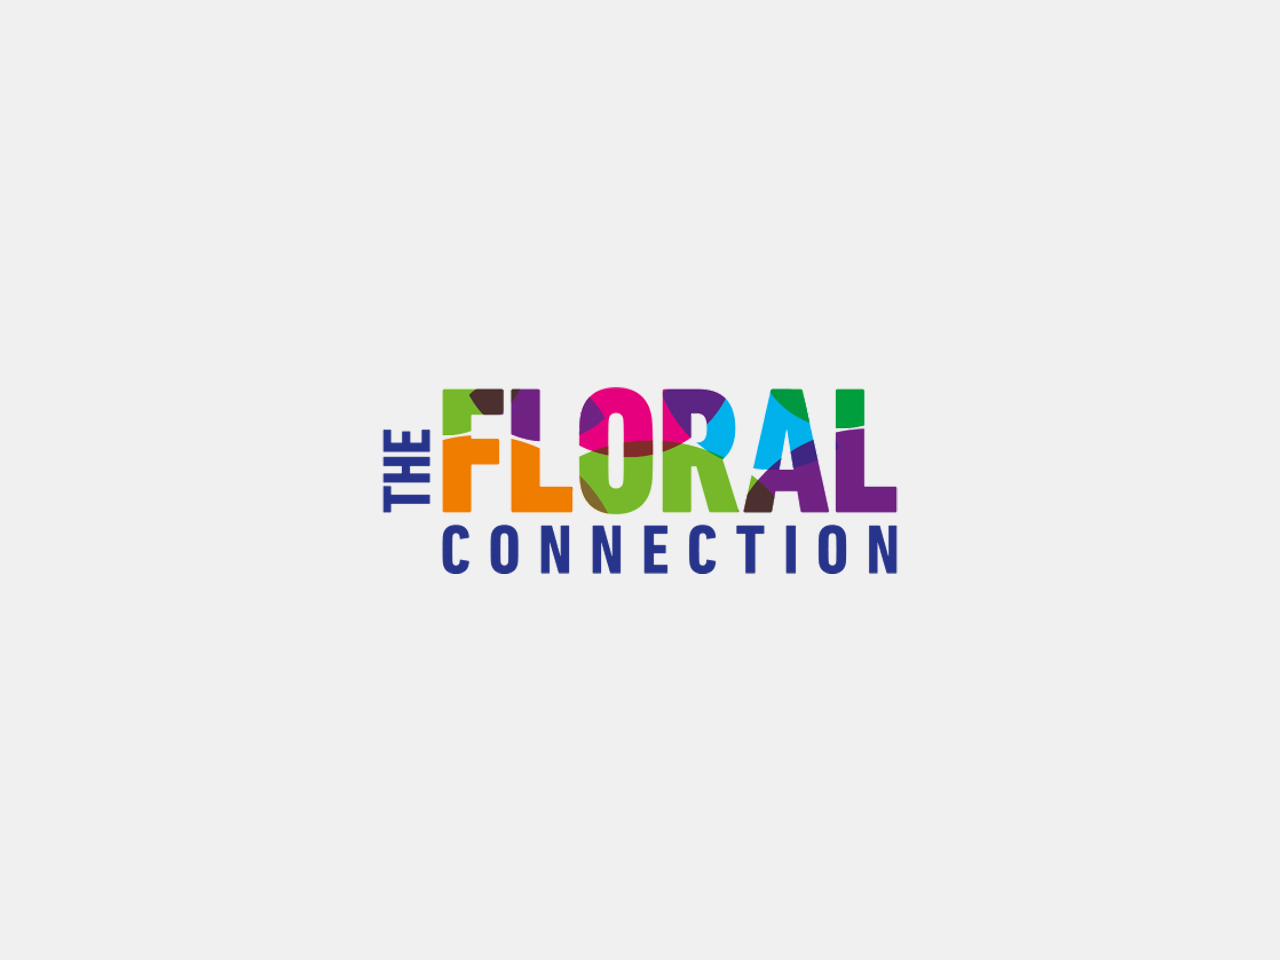 geschiedenis-thefloralconnection-logo-1280x960px-grijs